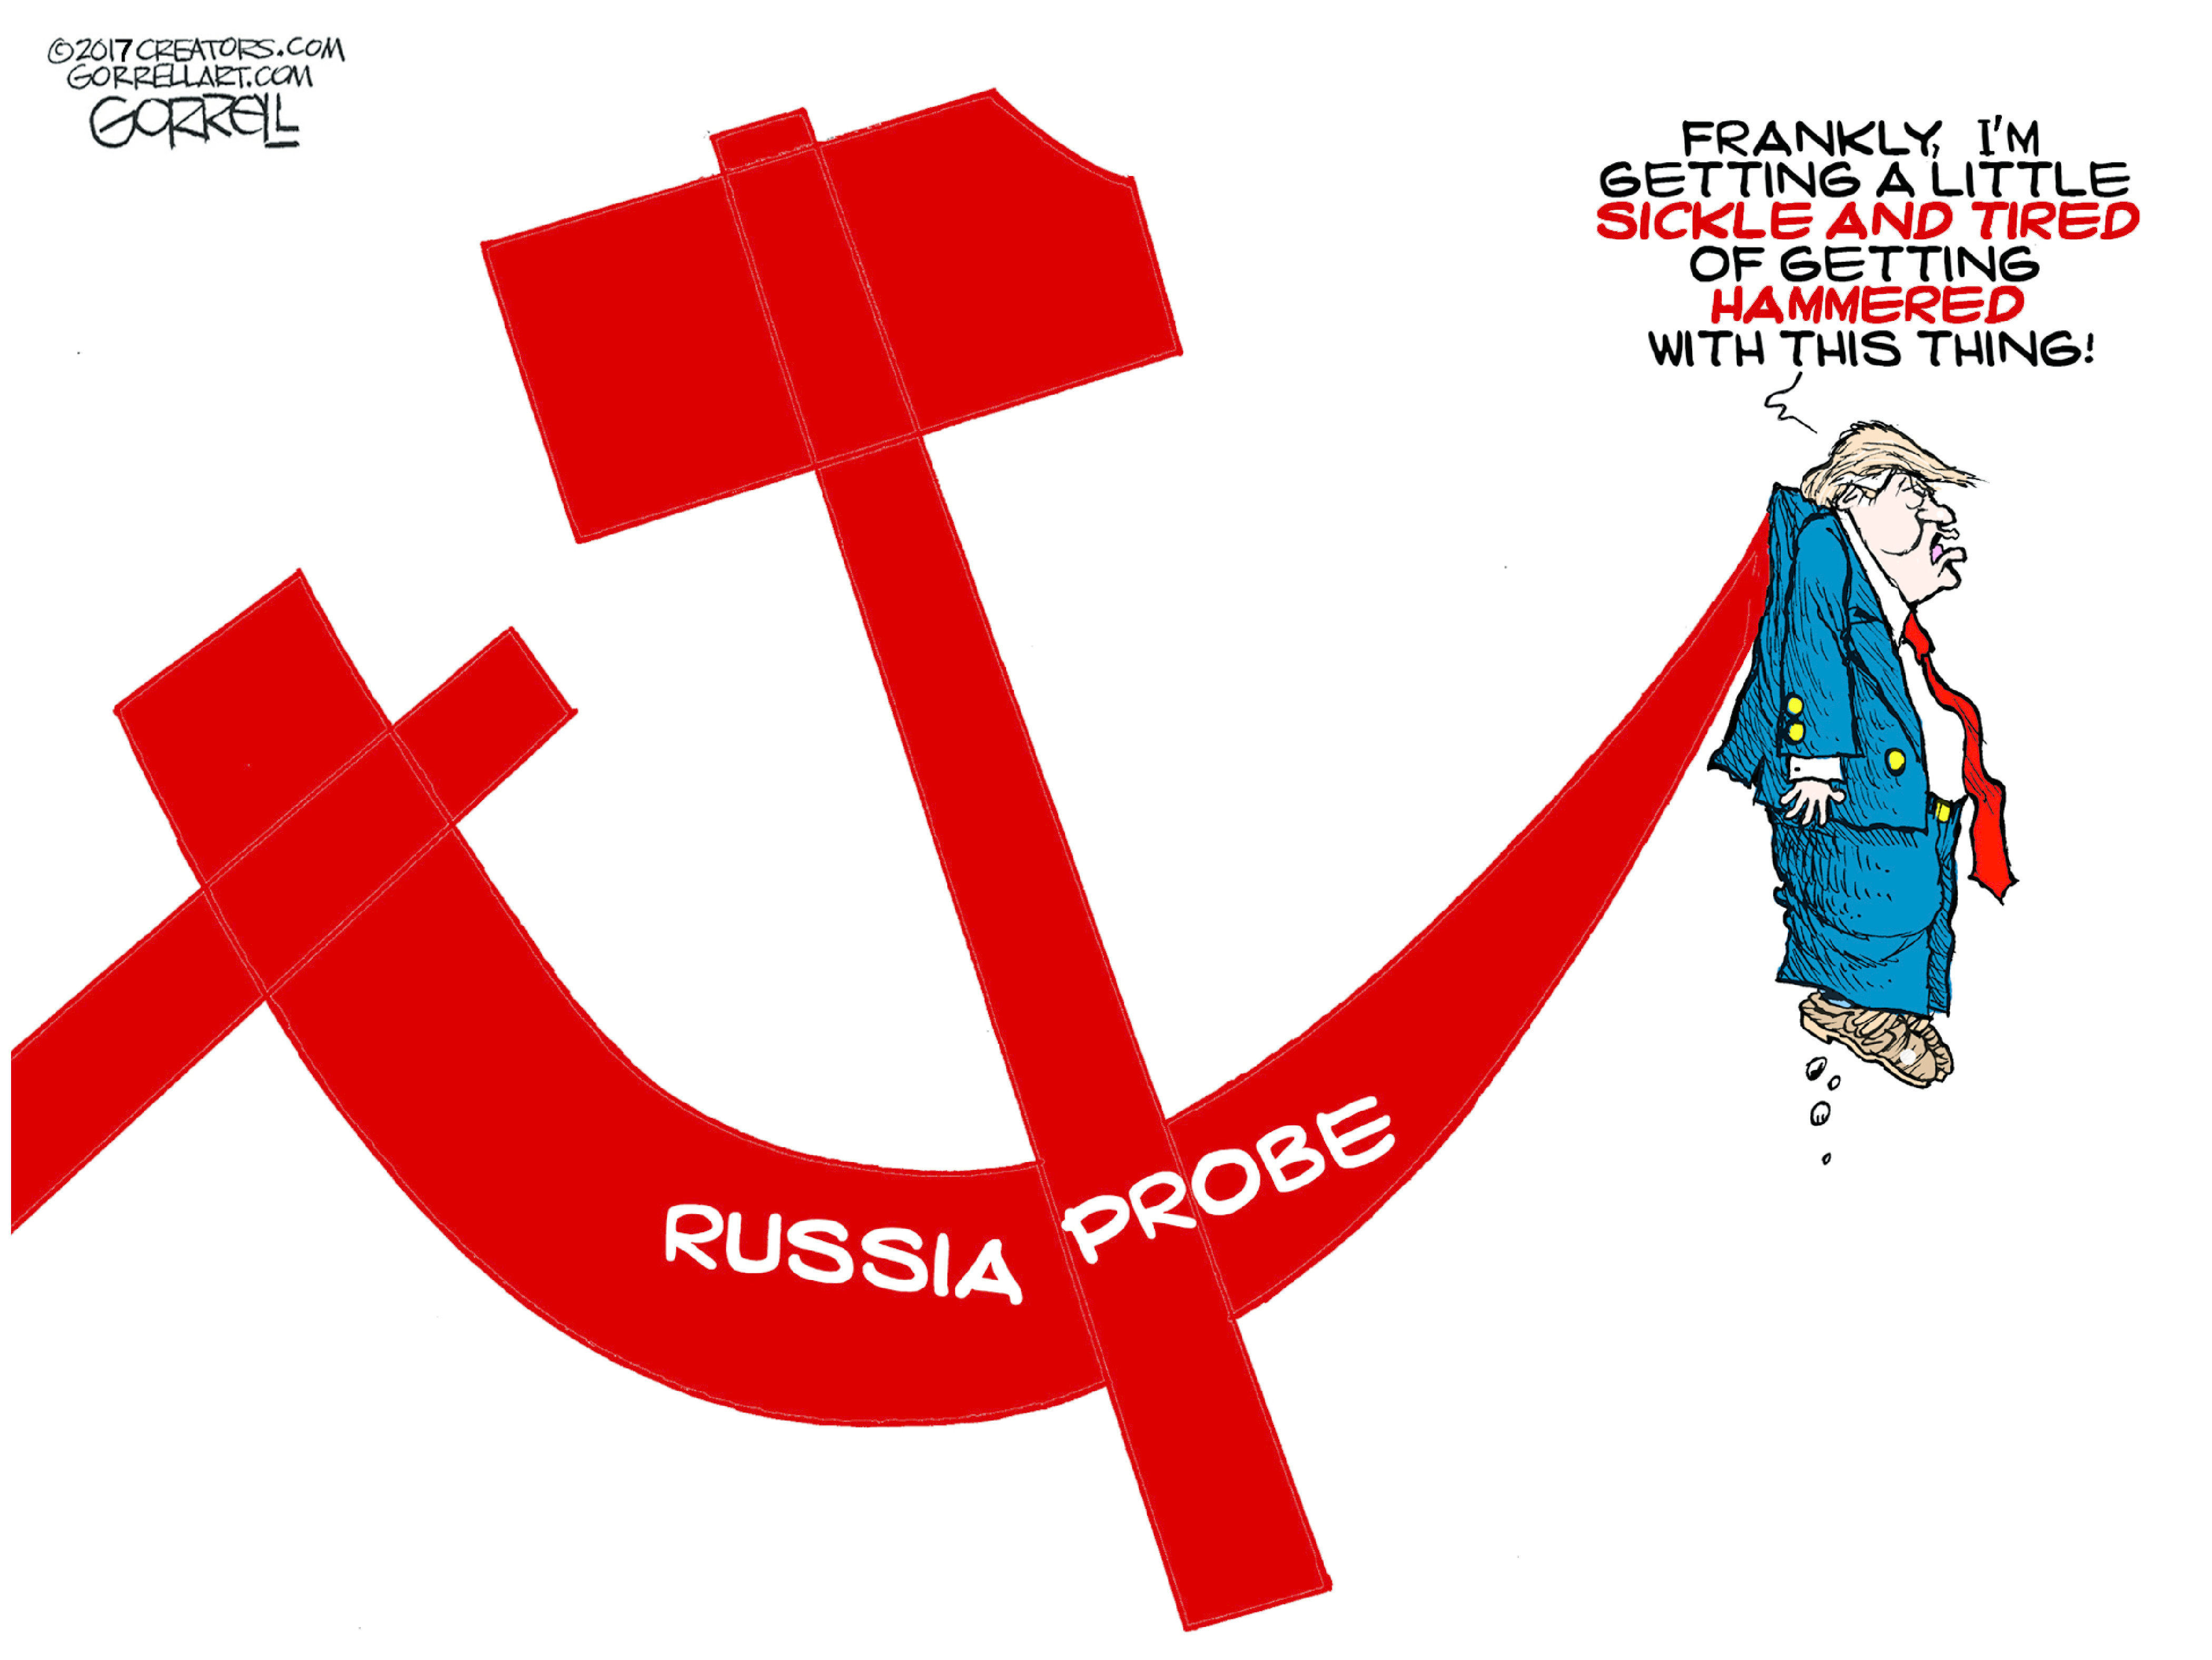 Political cartoon . Trump Russia investigation hammer and sickle  communism